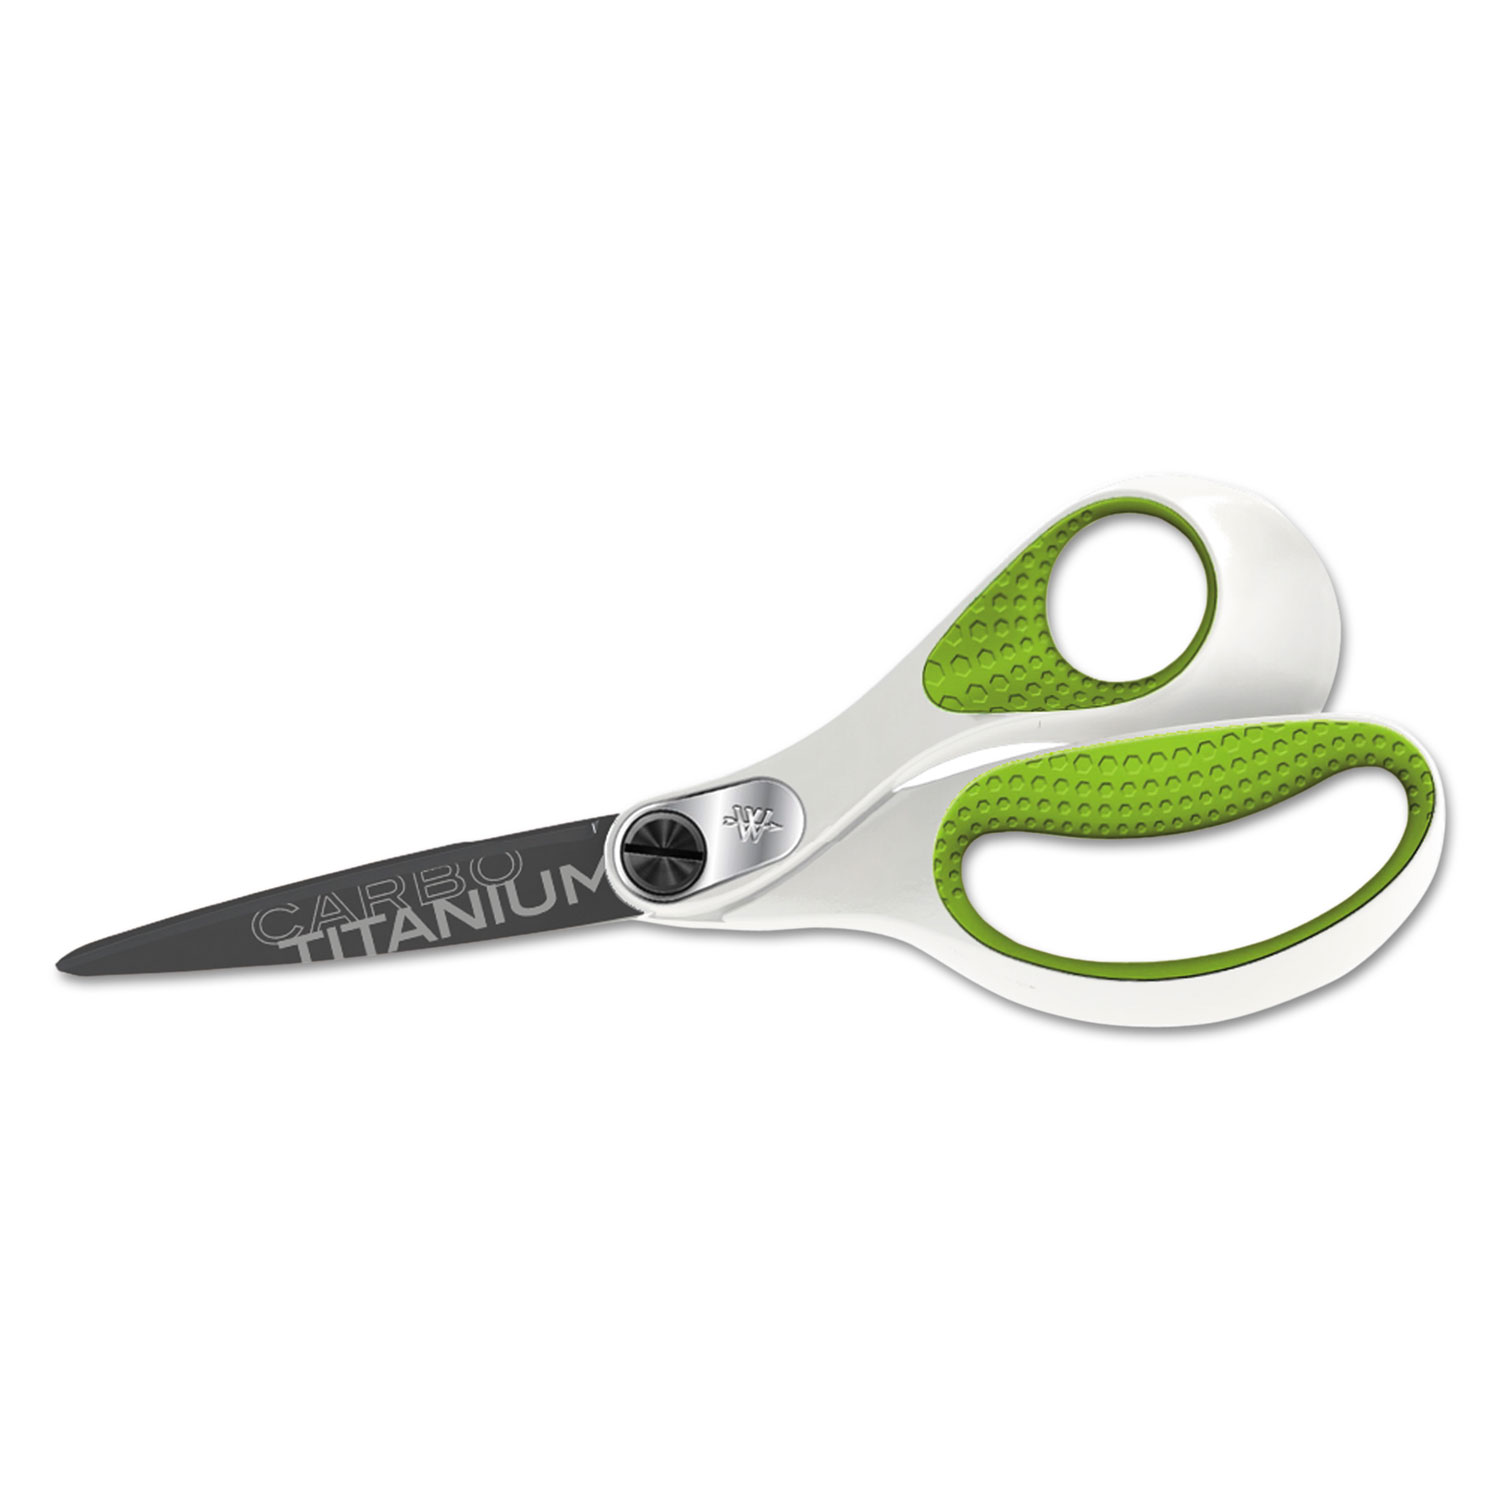  Westcott 16447 CarboTitanium Bonded Scissors, 8 Long, 3.25 Cut Length, White/Green Straight Handle (ACM16447) 